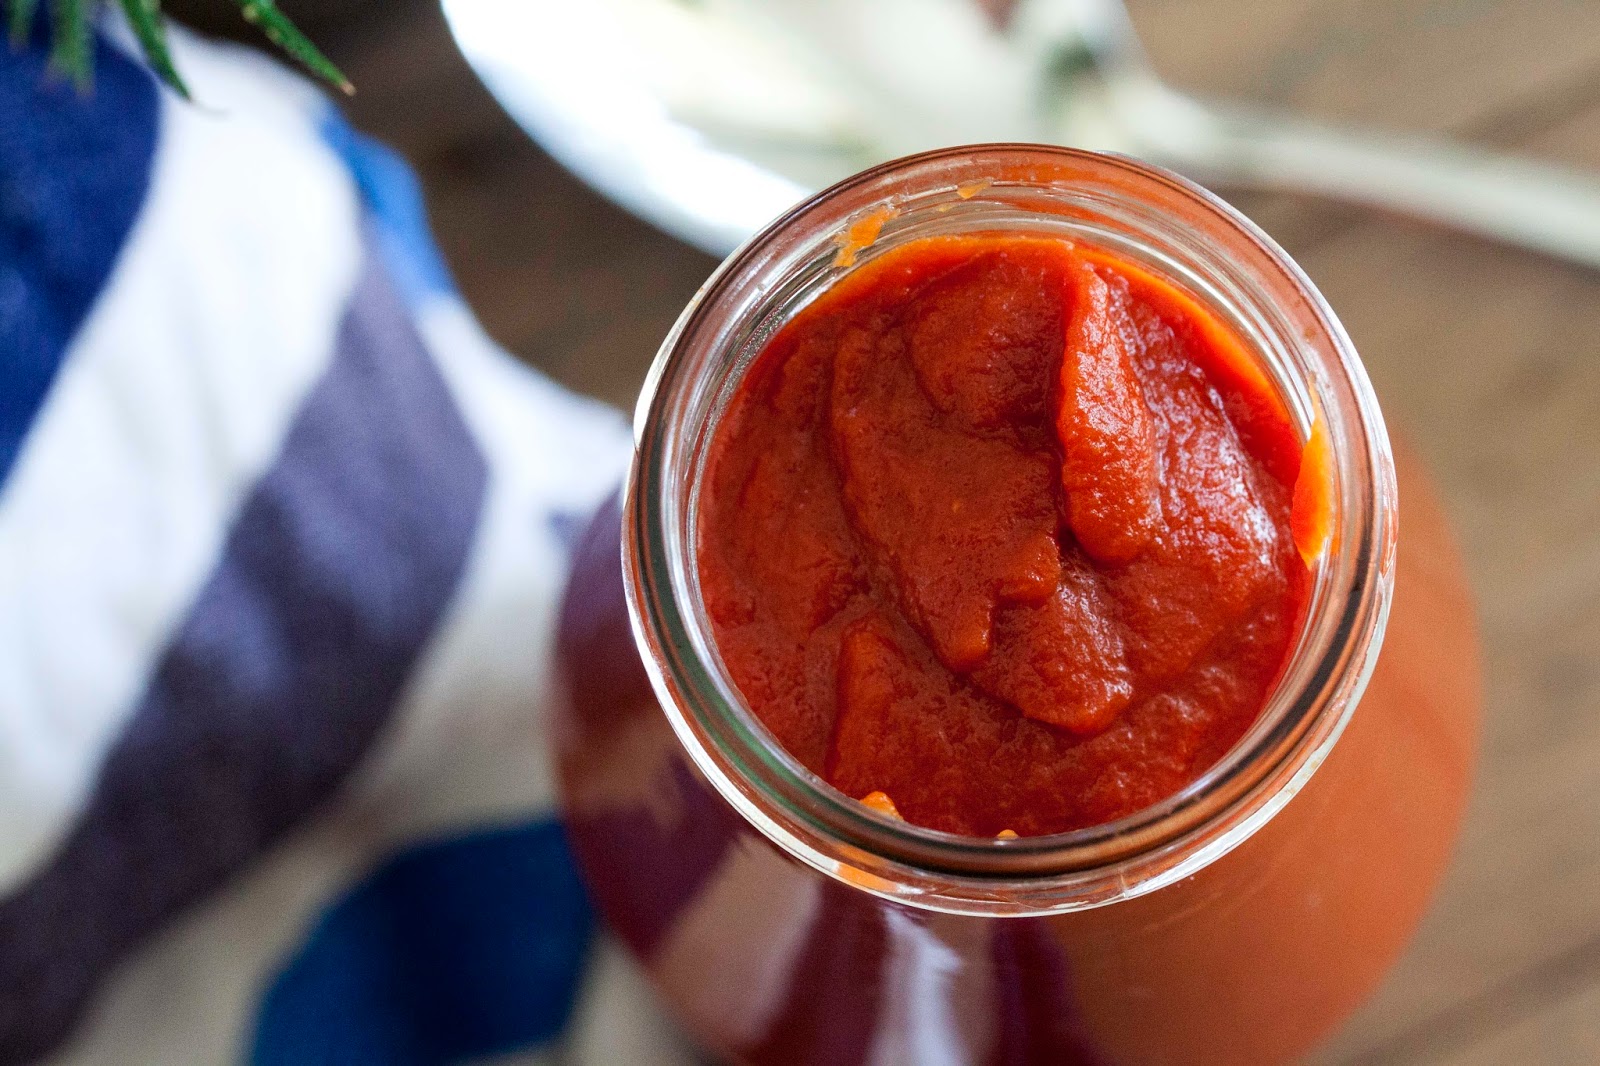 Tomato Sauce - Home made is always best! - KARENLUVSLIFE